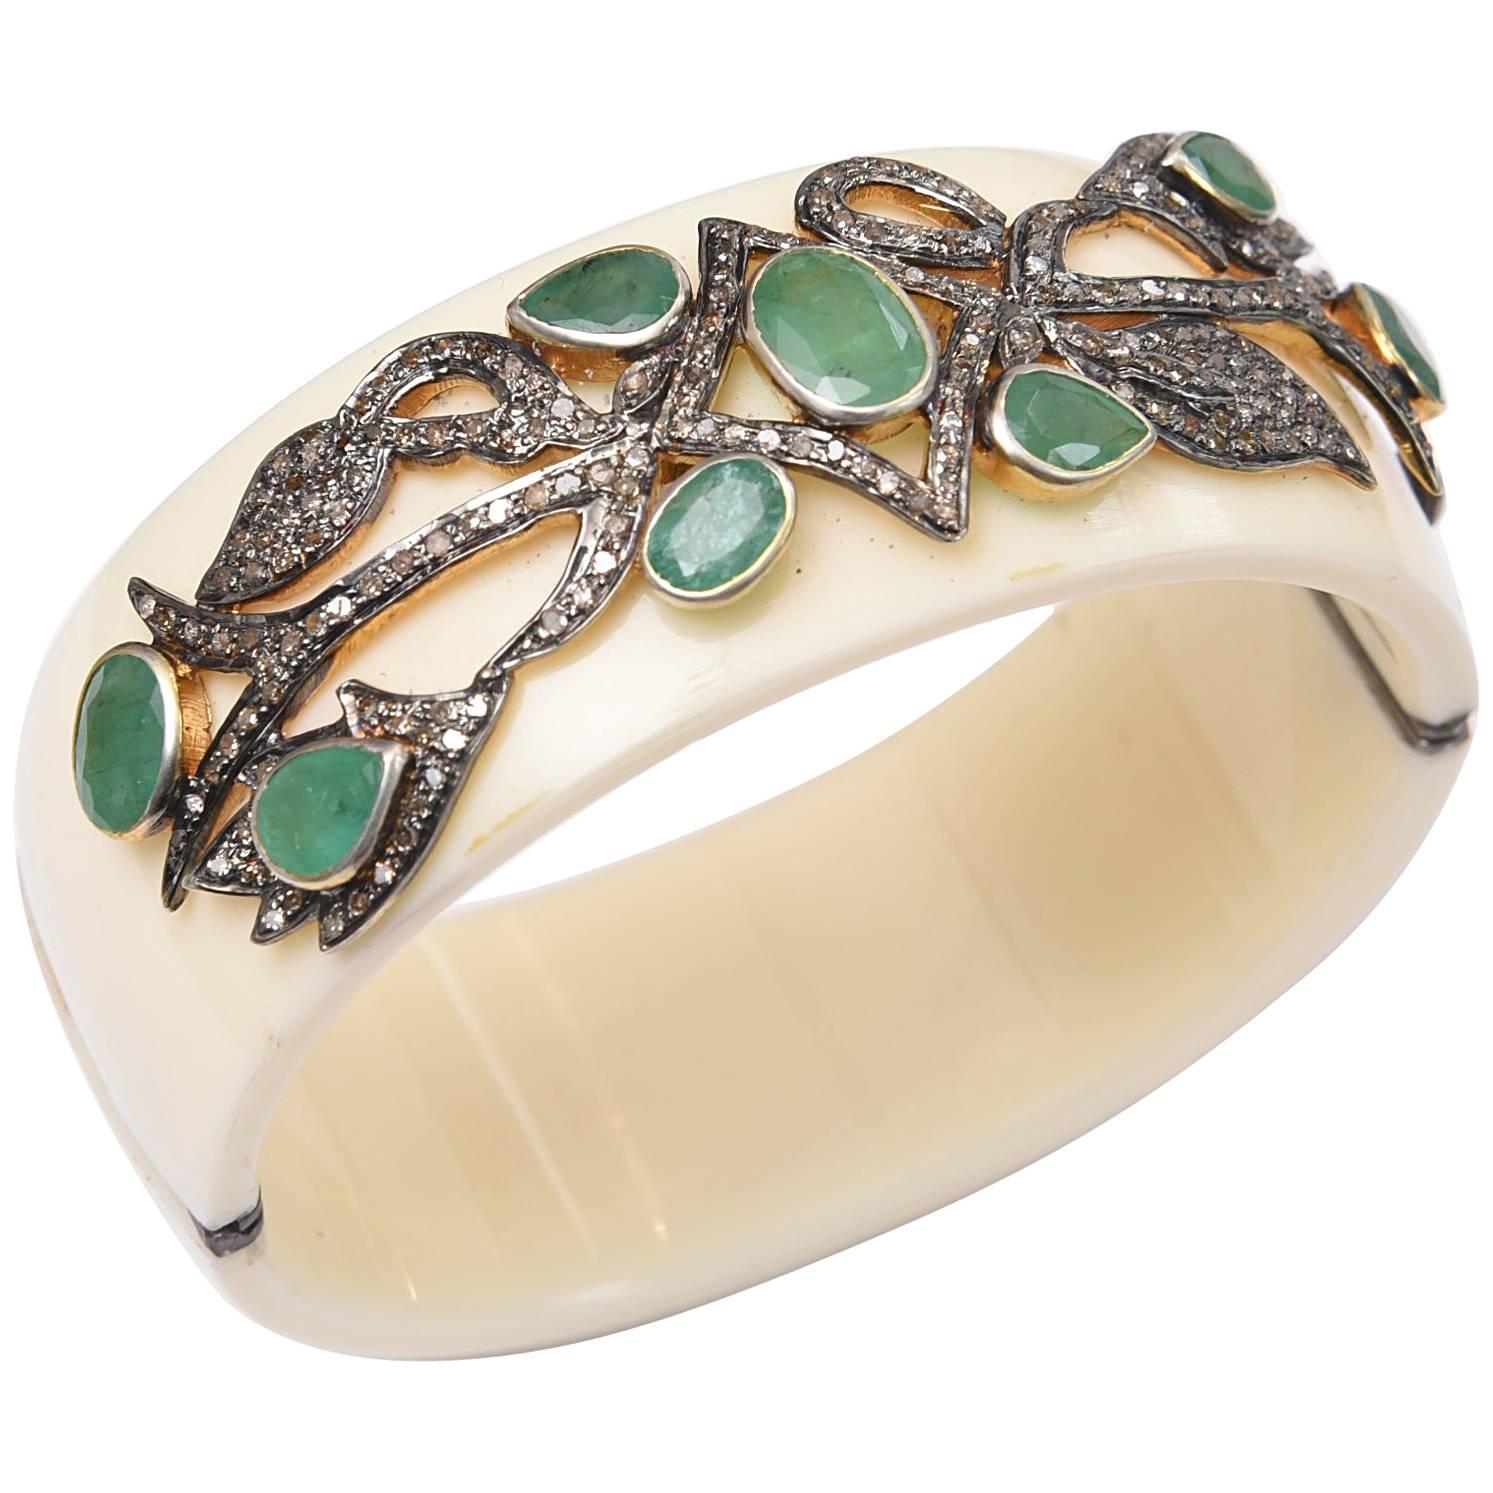 Bakelite Cuff Bracelet with Diamonds and Emeralds